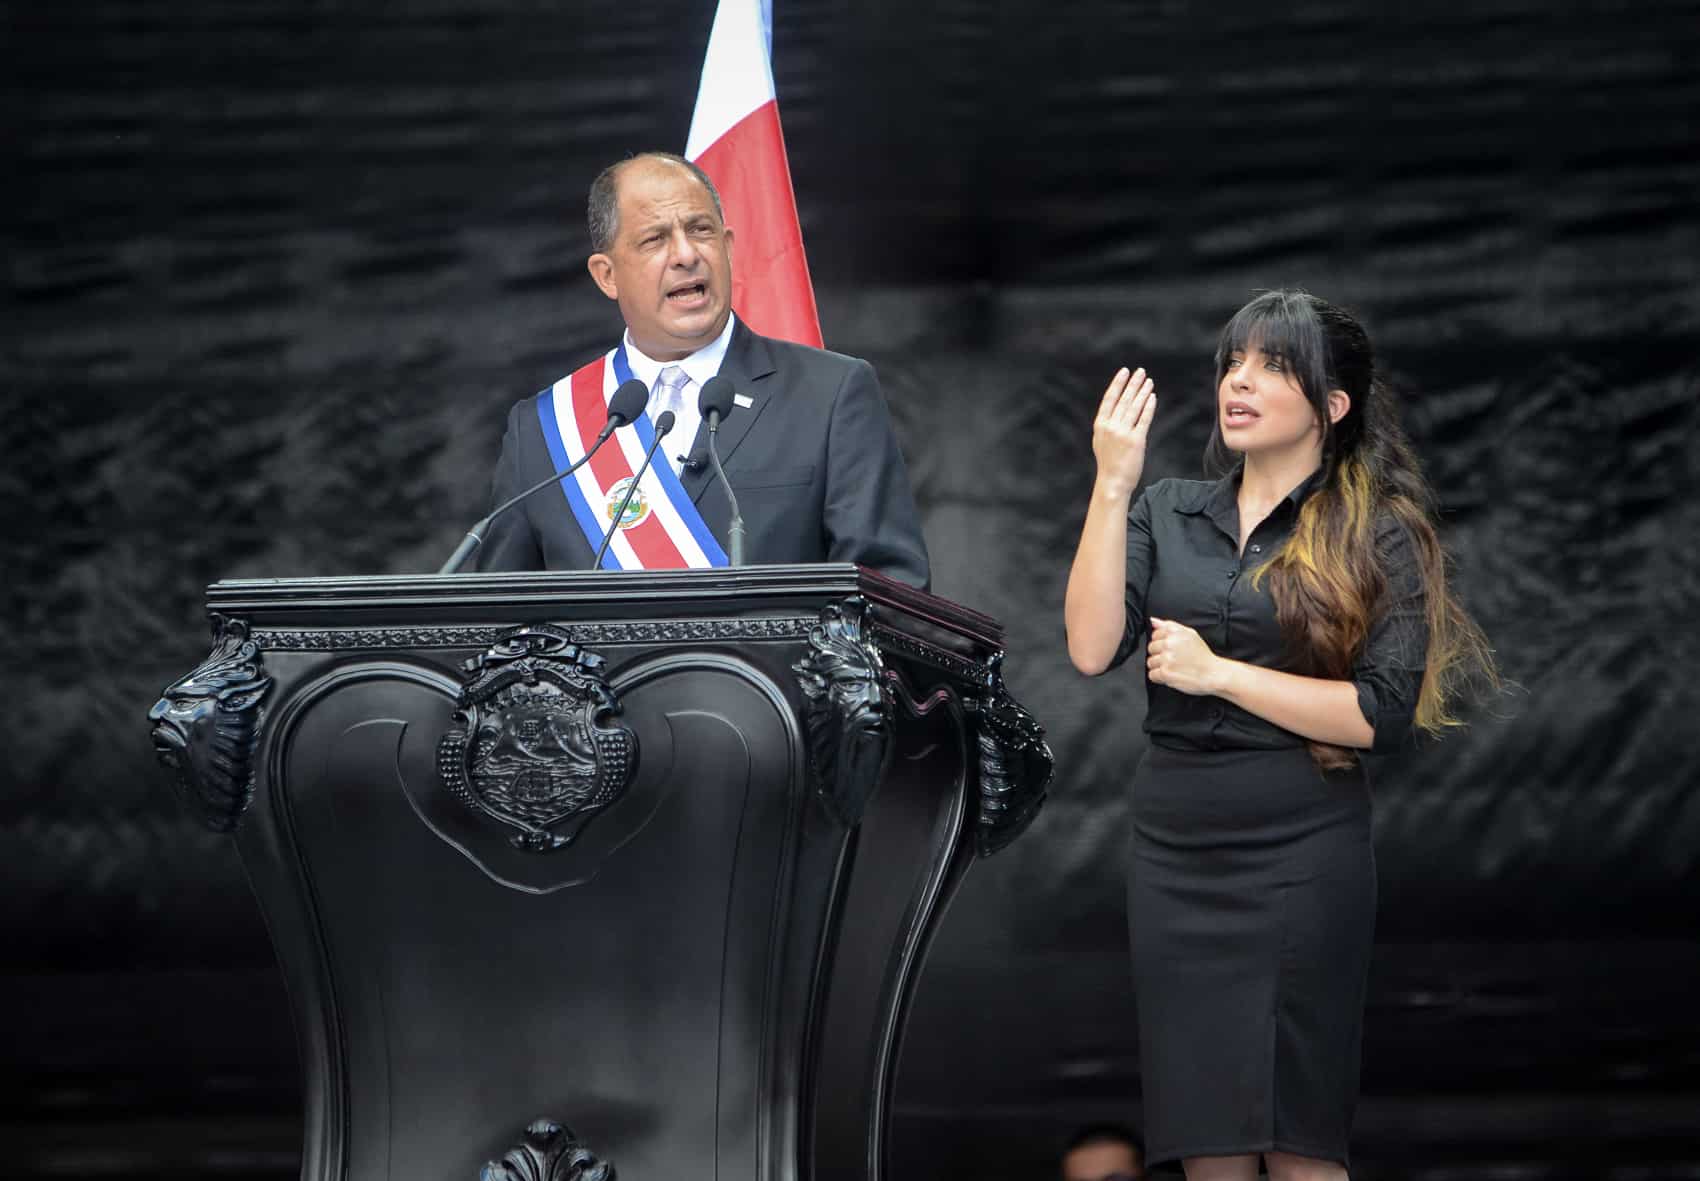 Estefanía Carvajal, right, signs President Luis Guillermo Solís' inauguration speech on May 8, 2014.